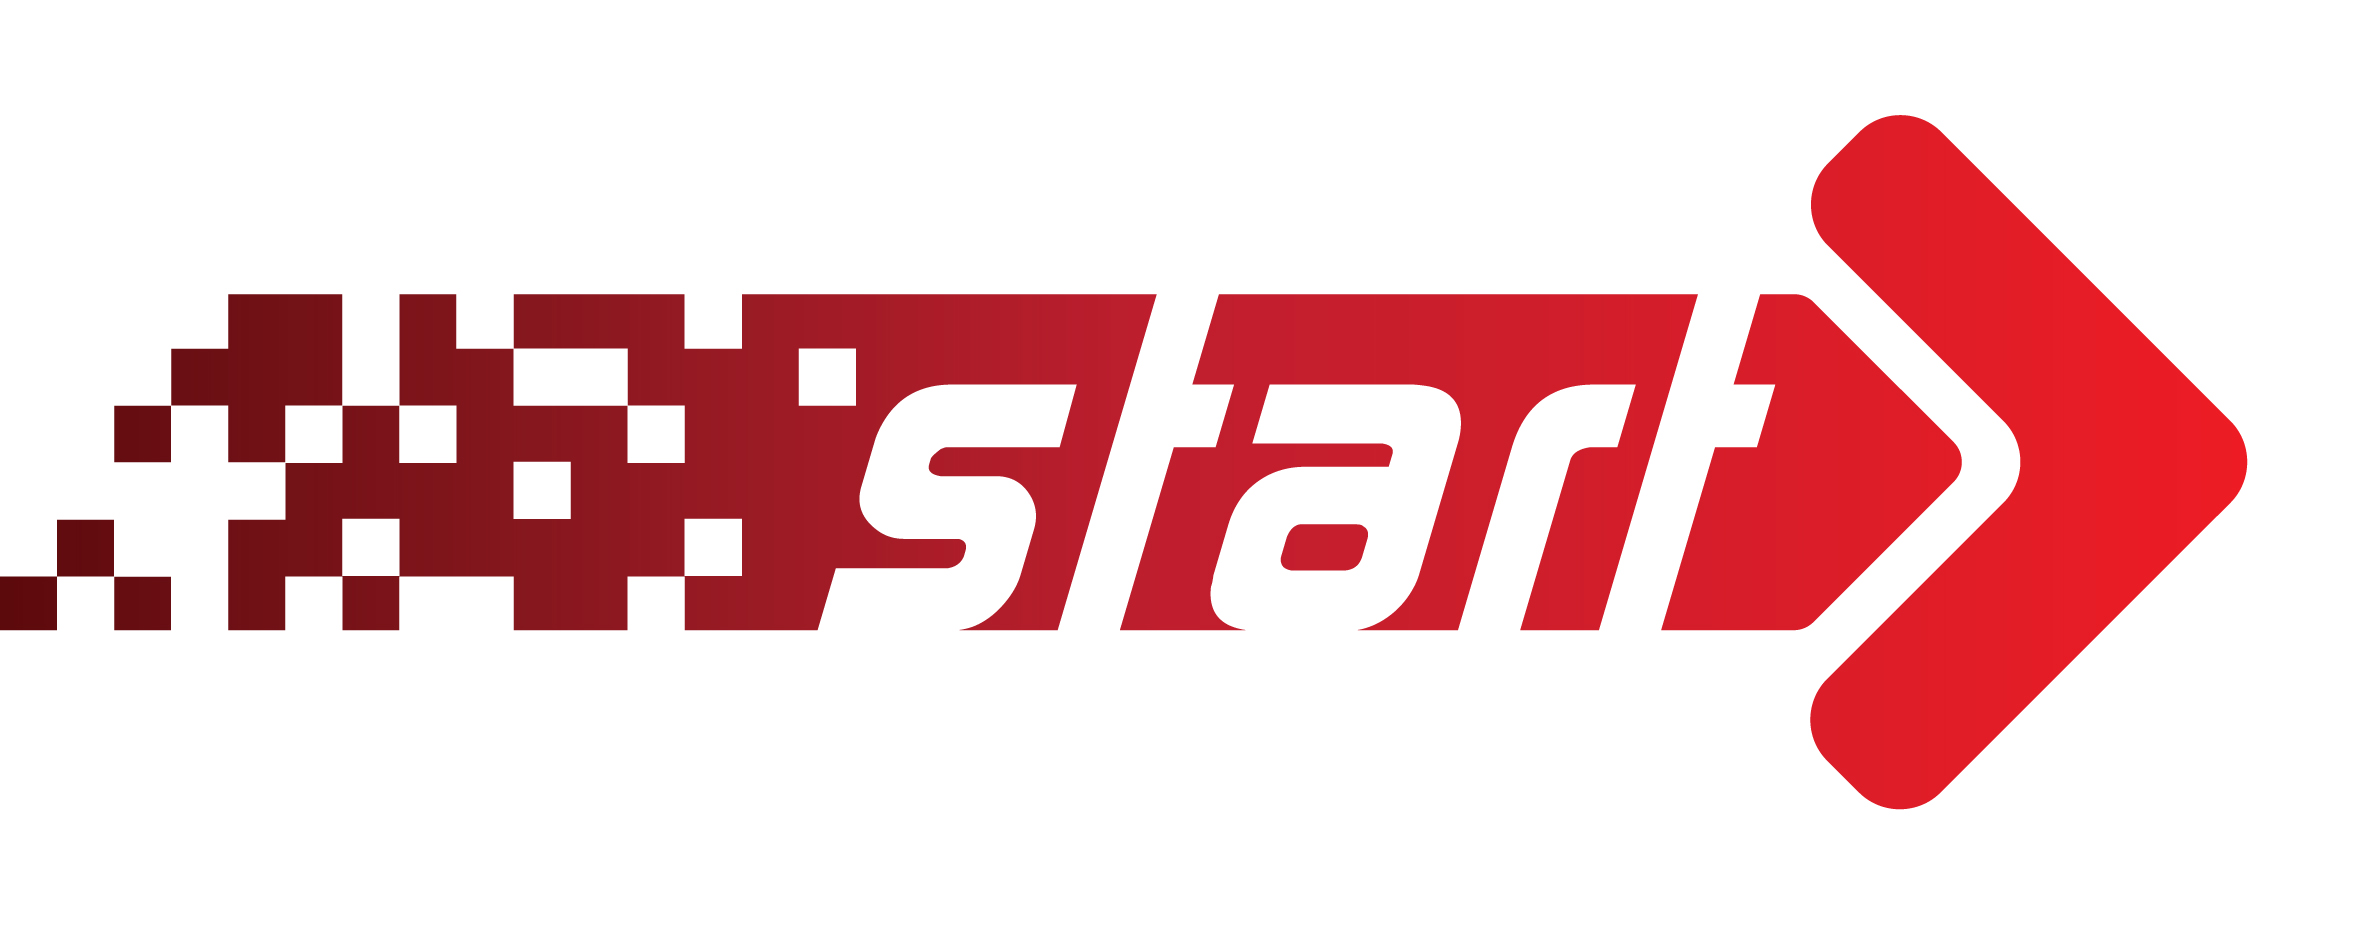 Start ref. Start логотип. Надпись старт. Autostart логотип. Start вектор.